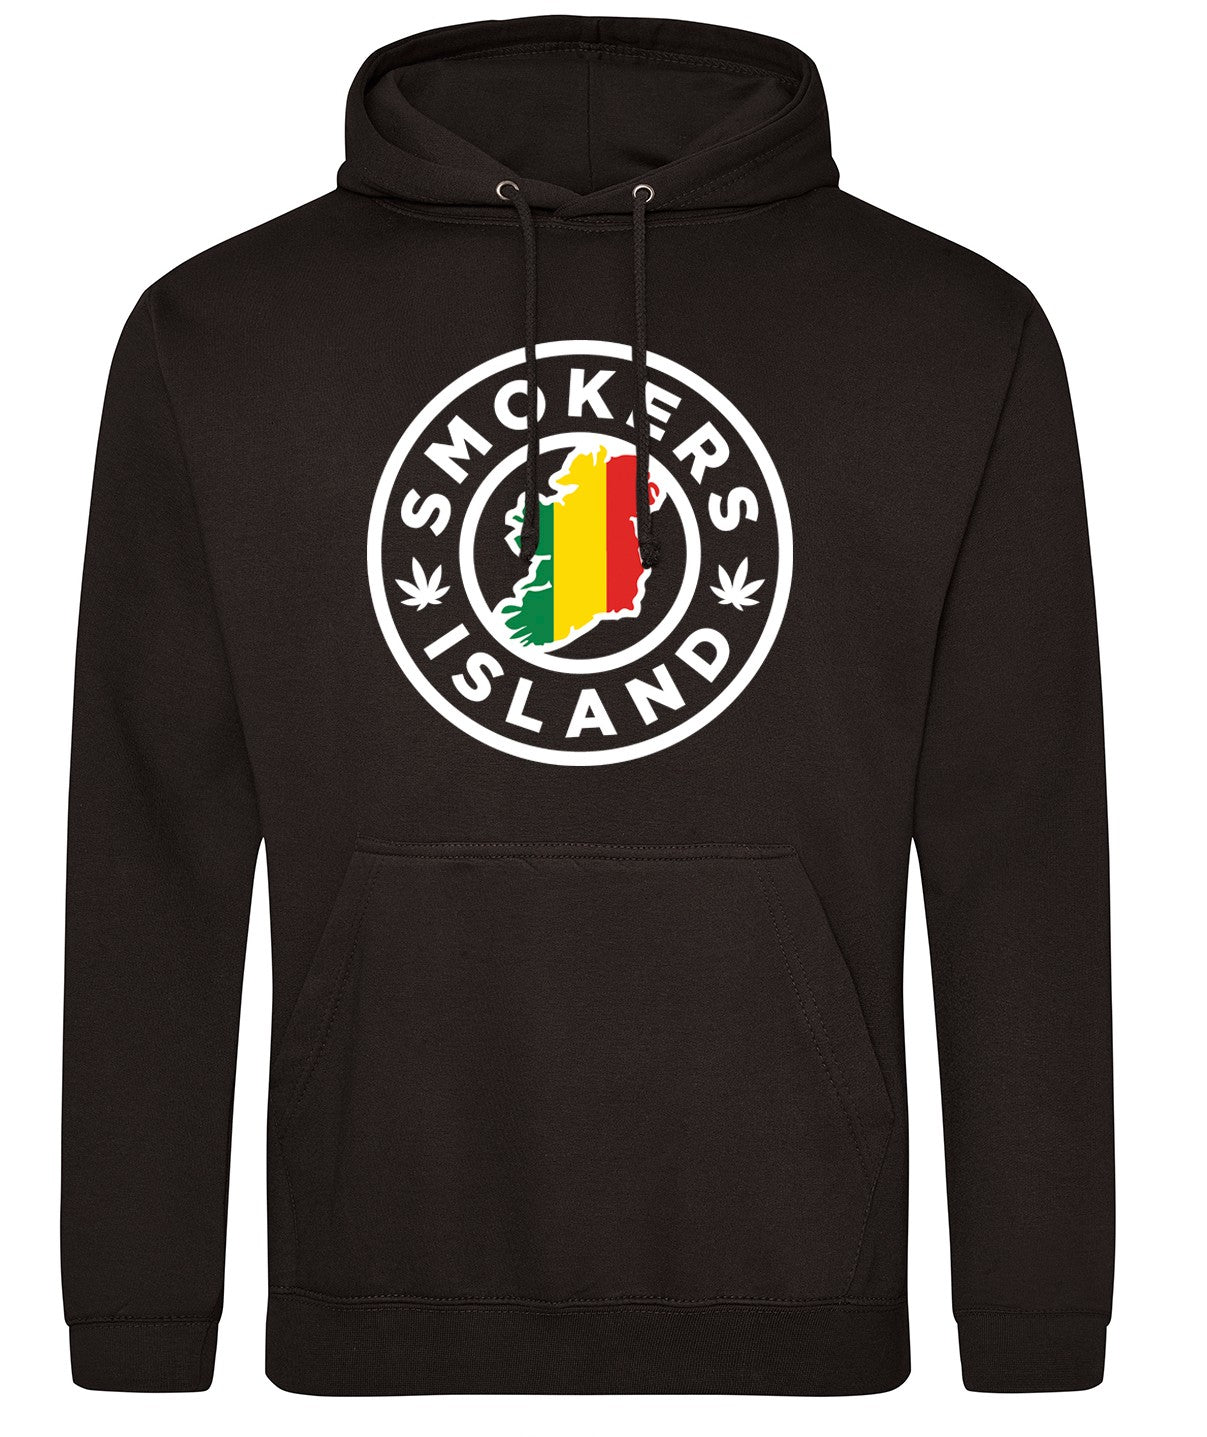 G-Style Hoodie - Smokers Island (Black)